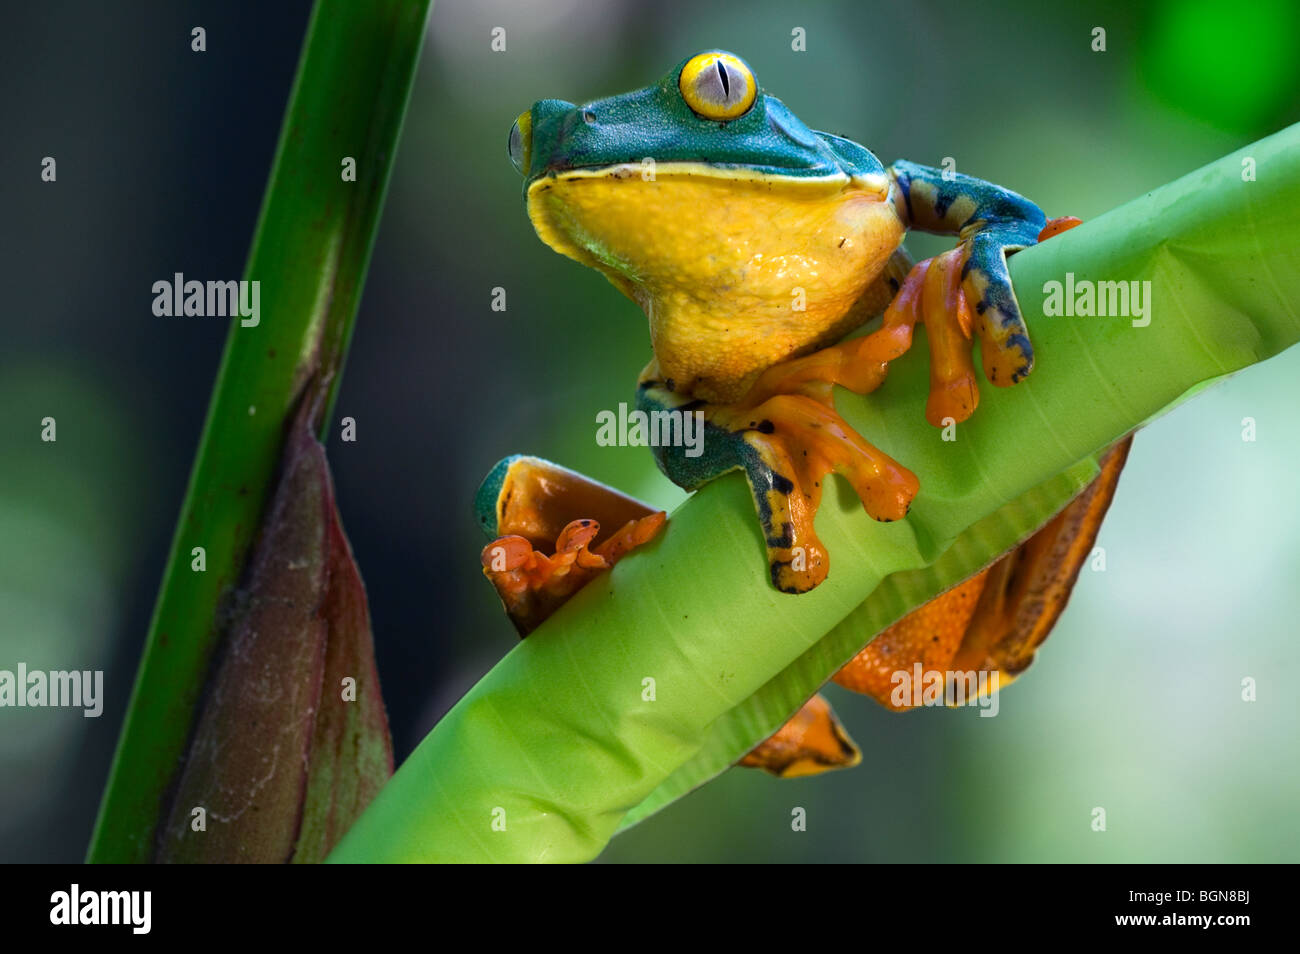 Splendid leaf frog (Agalychnis calcarifer) perched on leaf in rainforest, Costa Rica, Central America Stock Photo